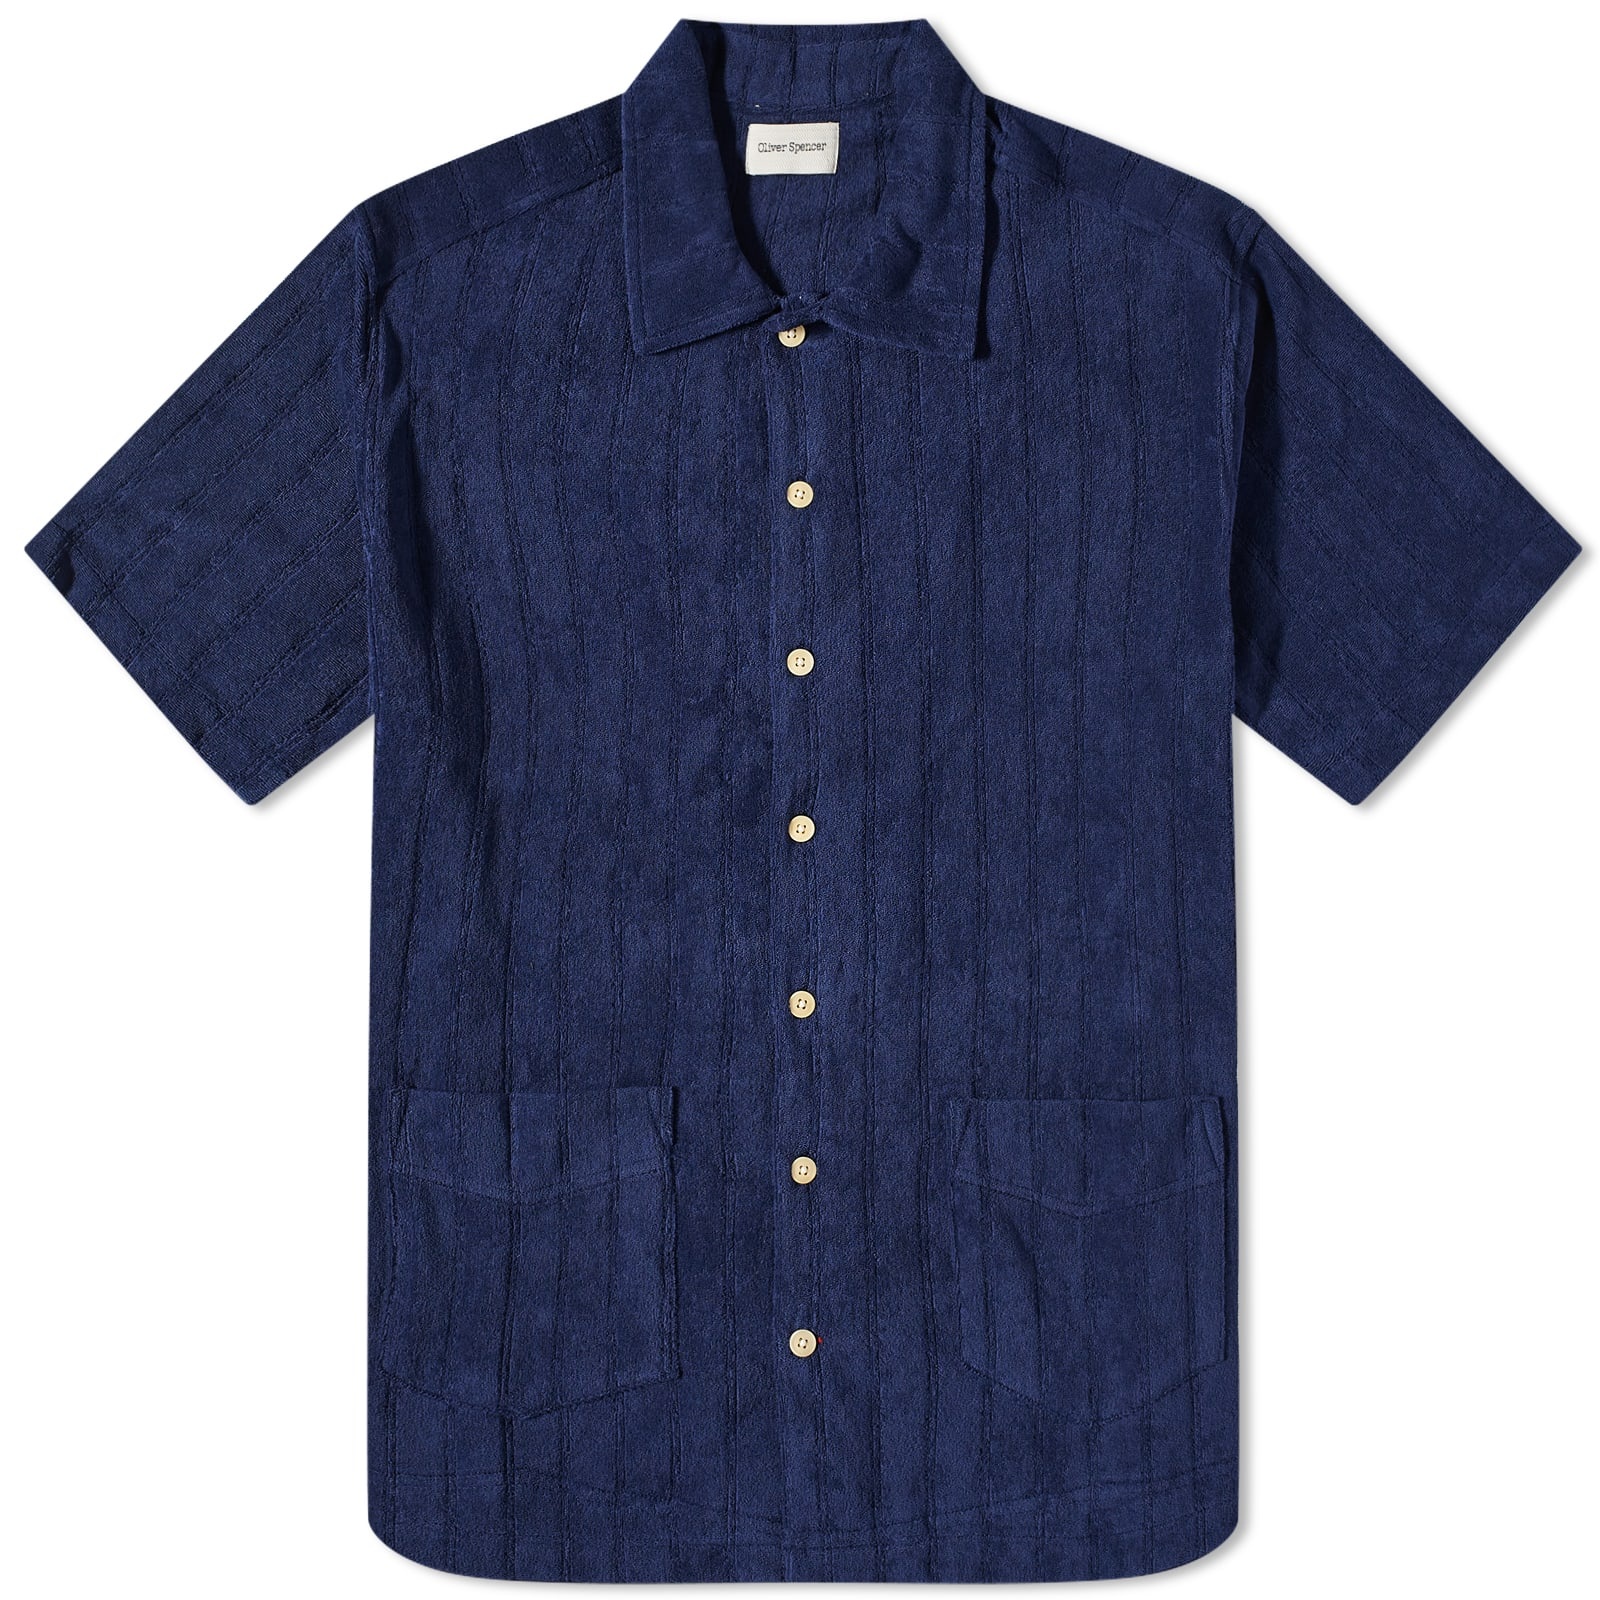 Oliver Spencer Cuban Short Sleeve Jersey Shirt - 1